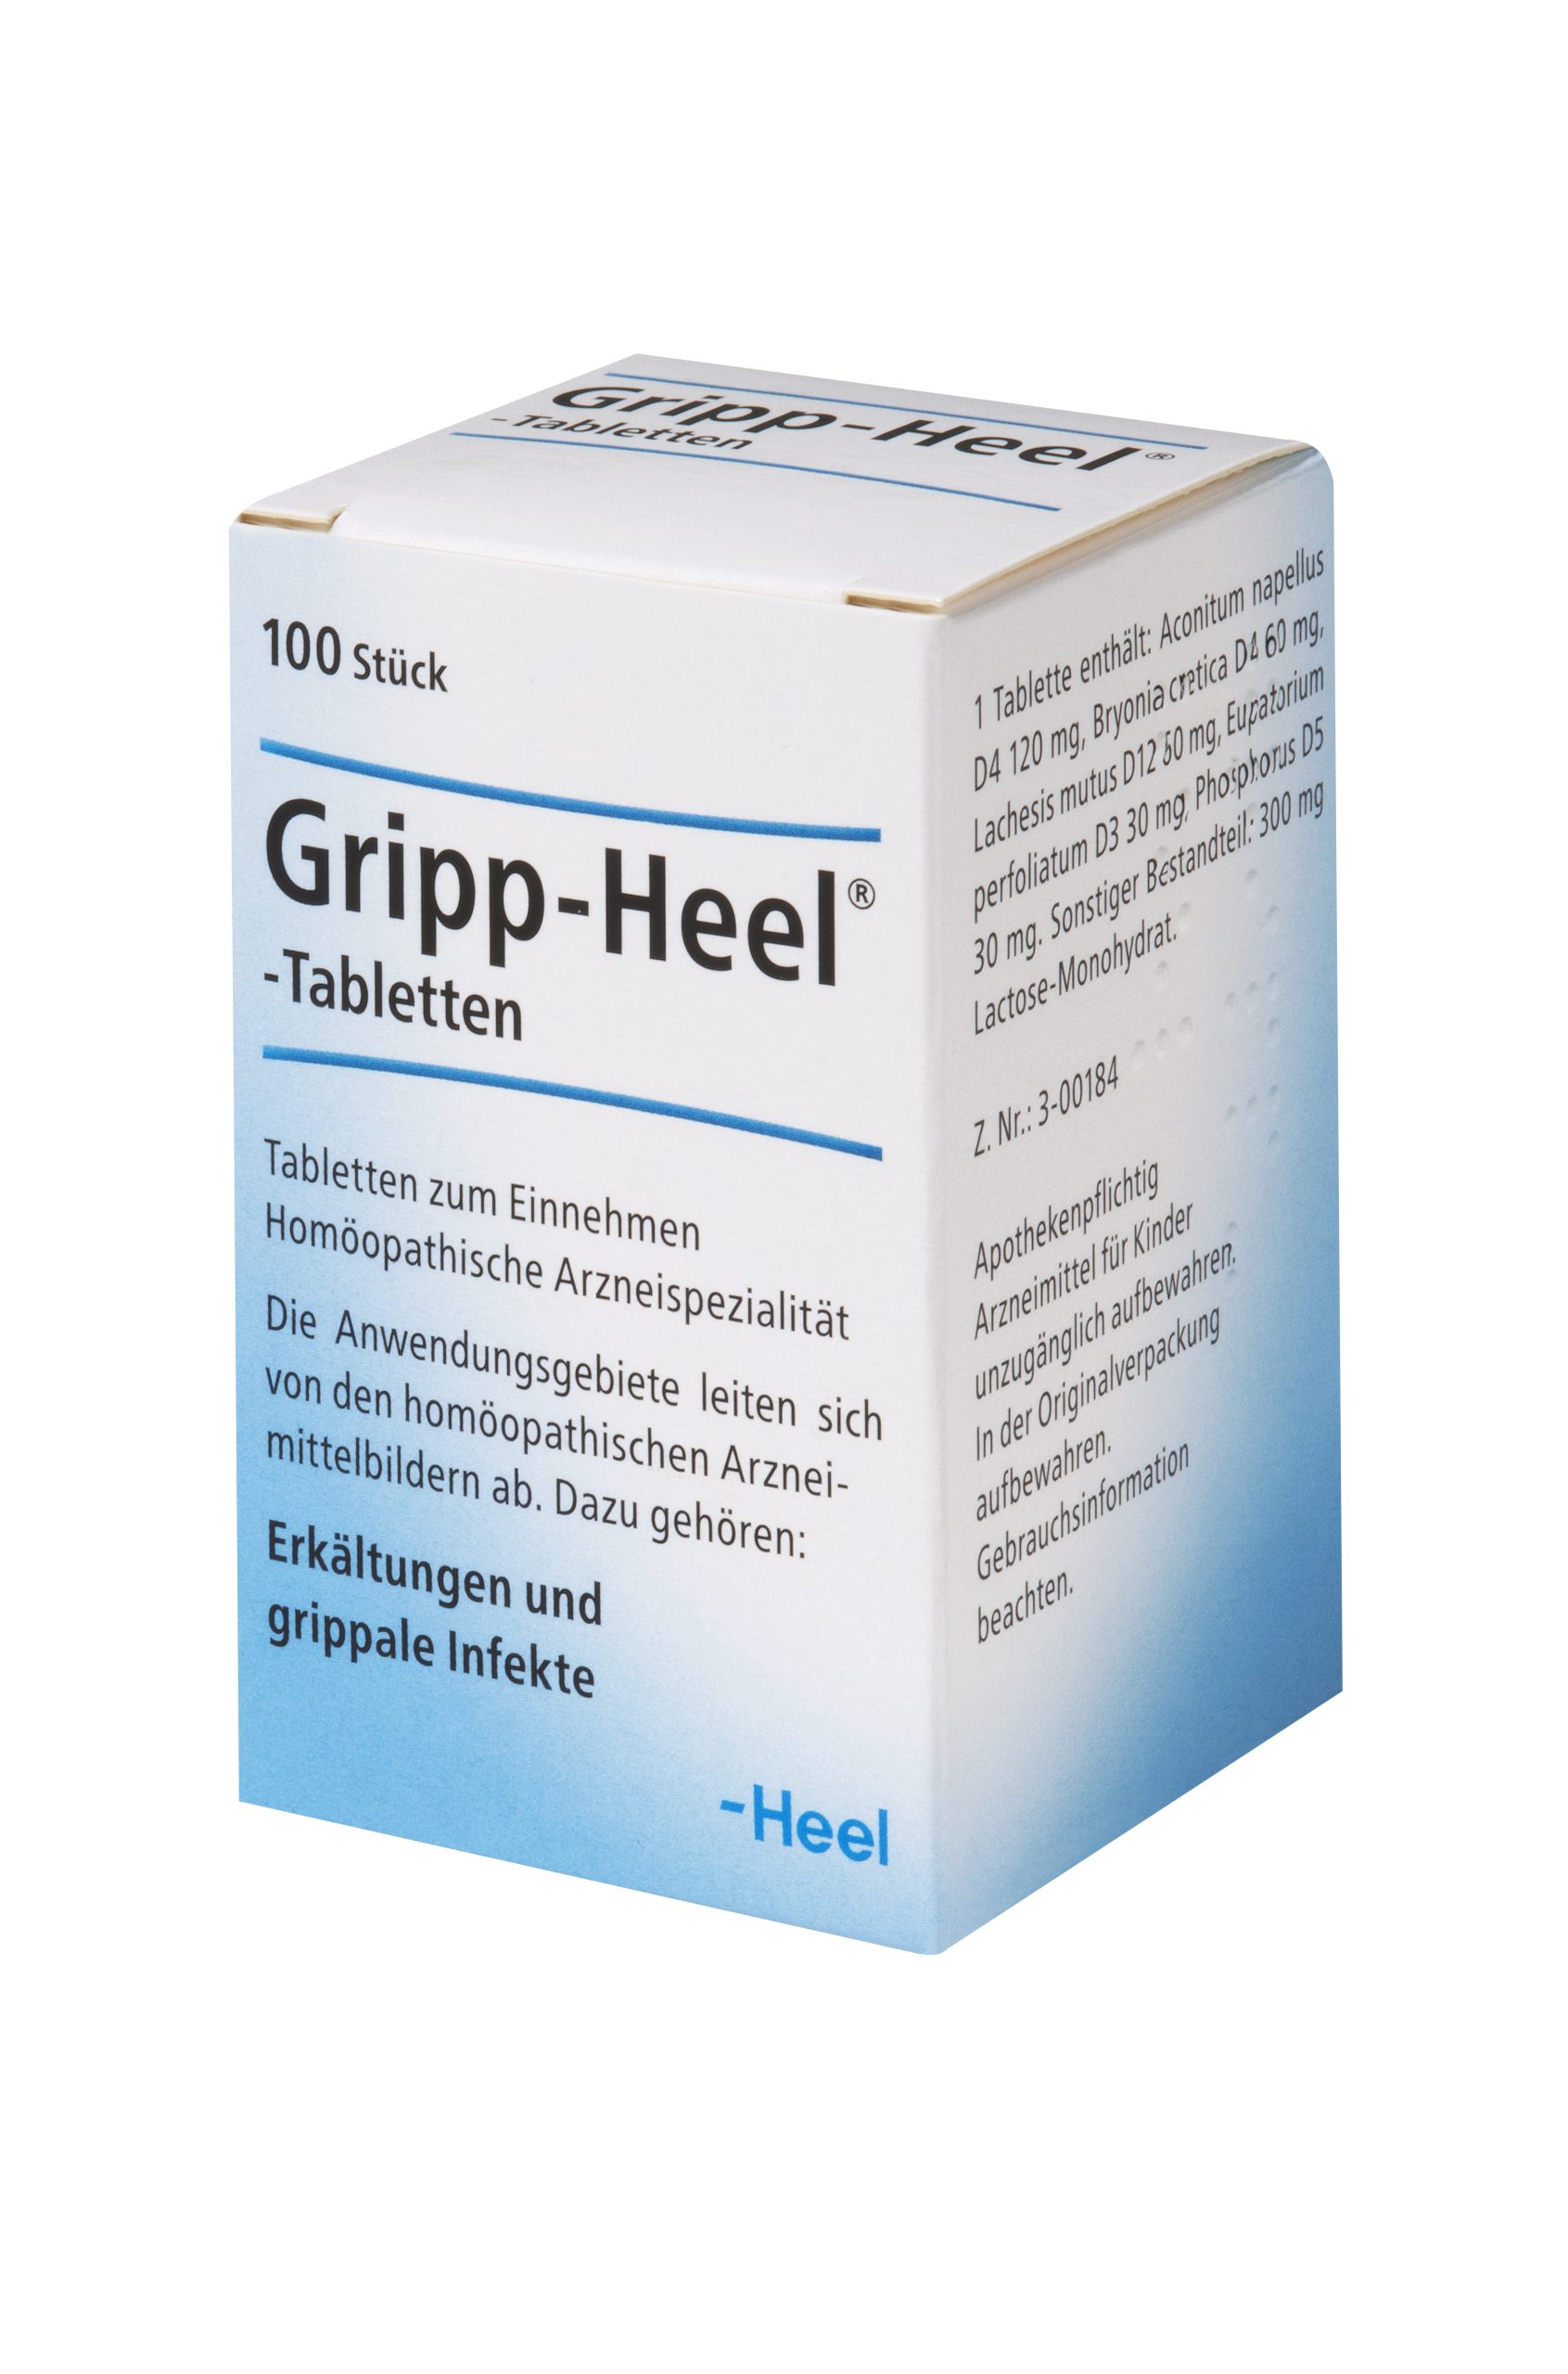 Gripp-Heel Packshot - © Brigitte Gradwohl